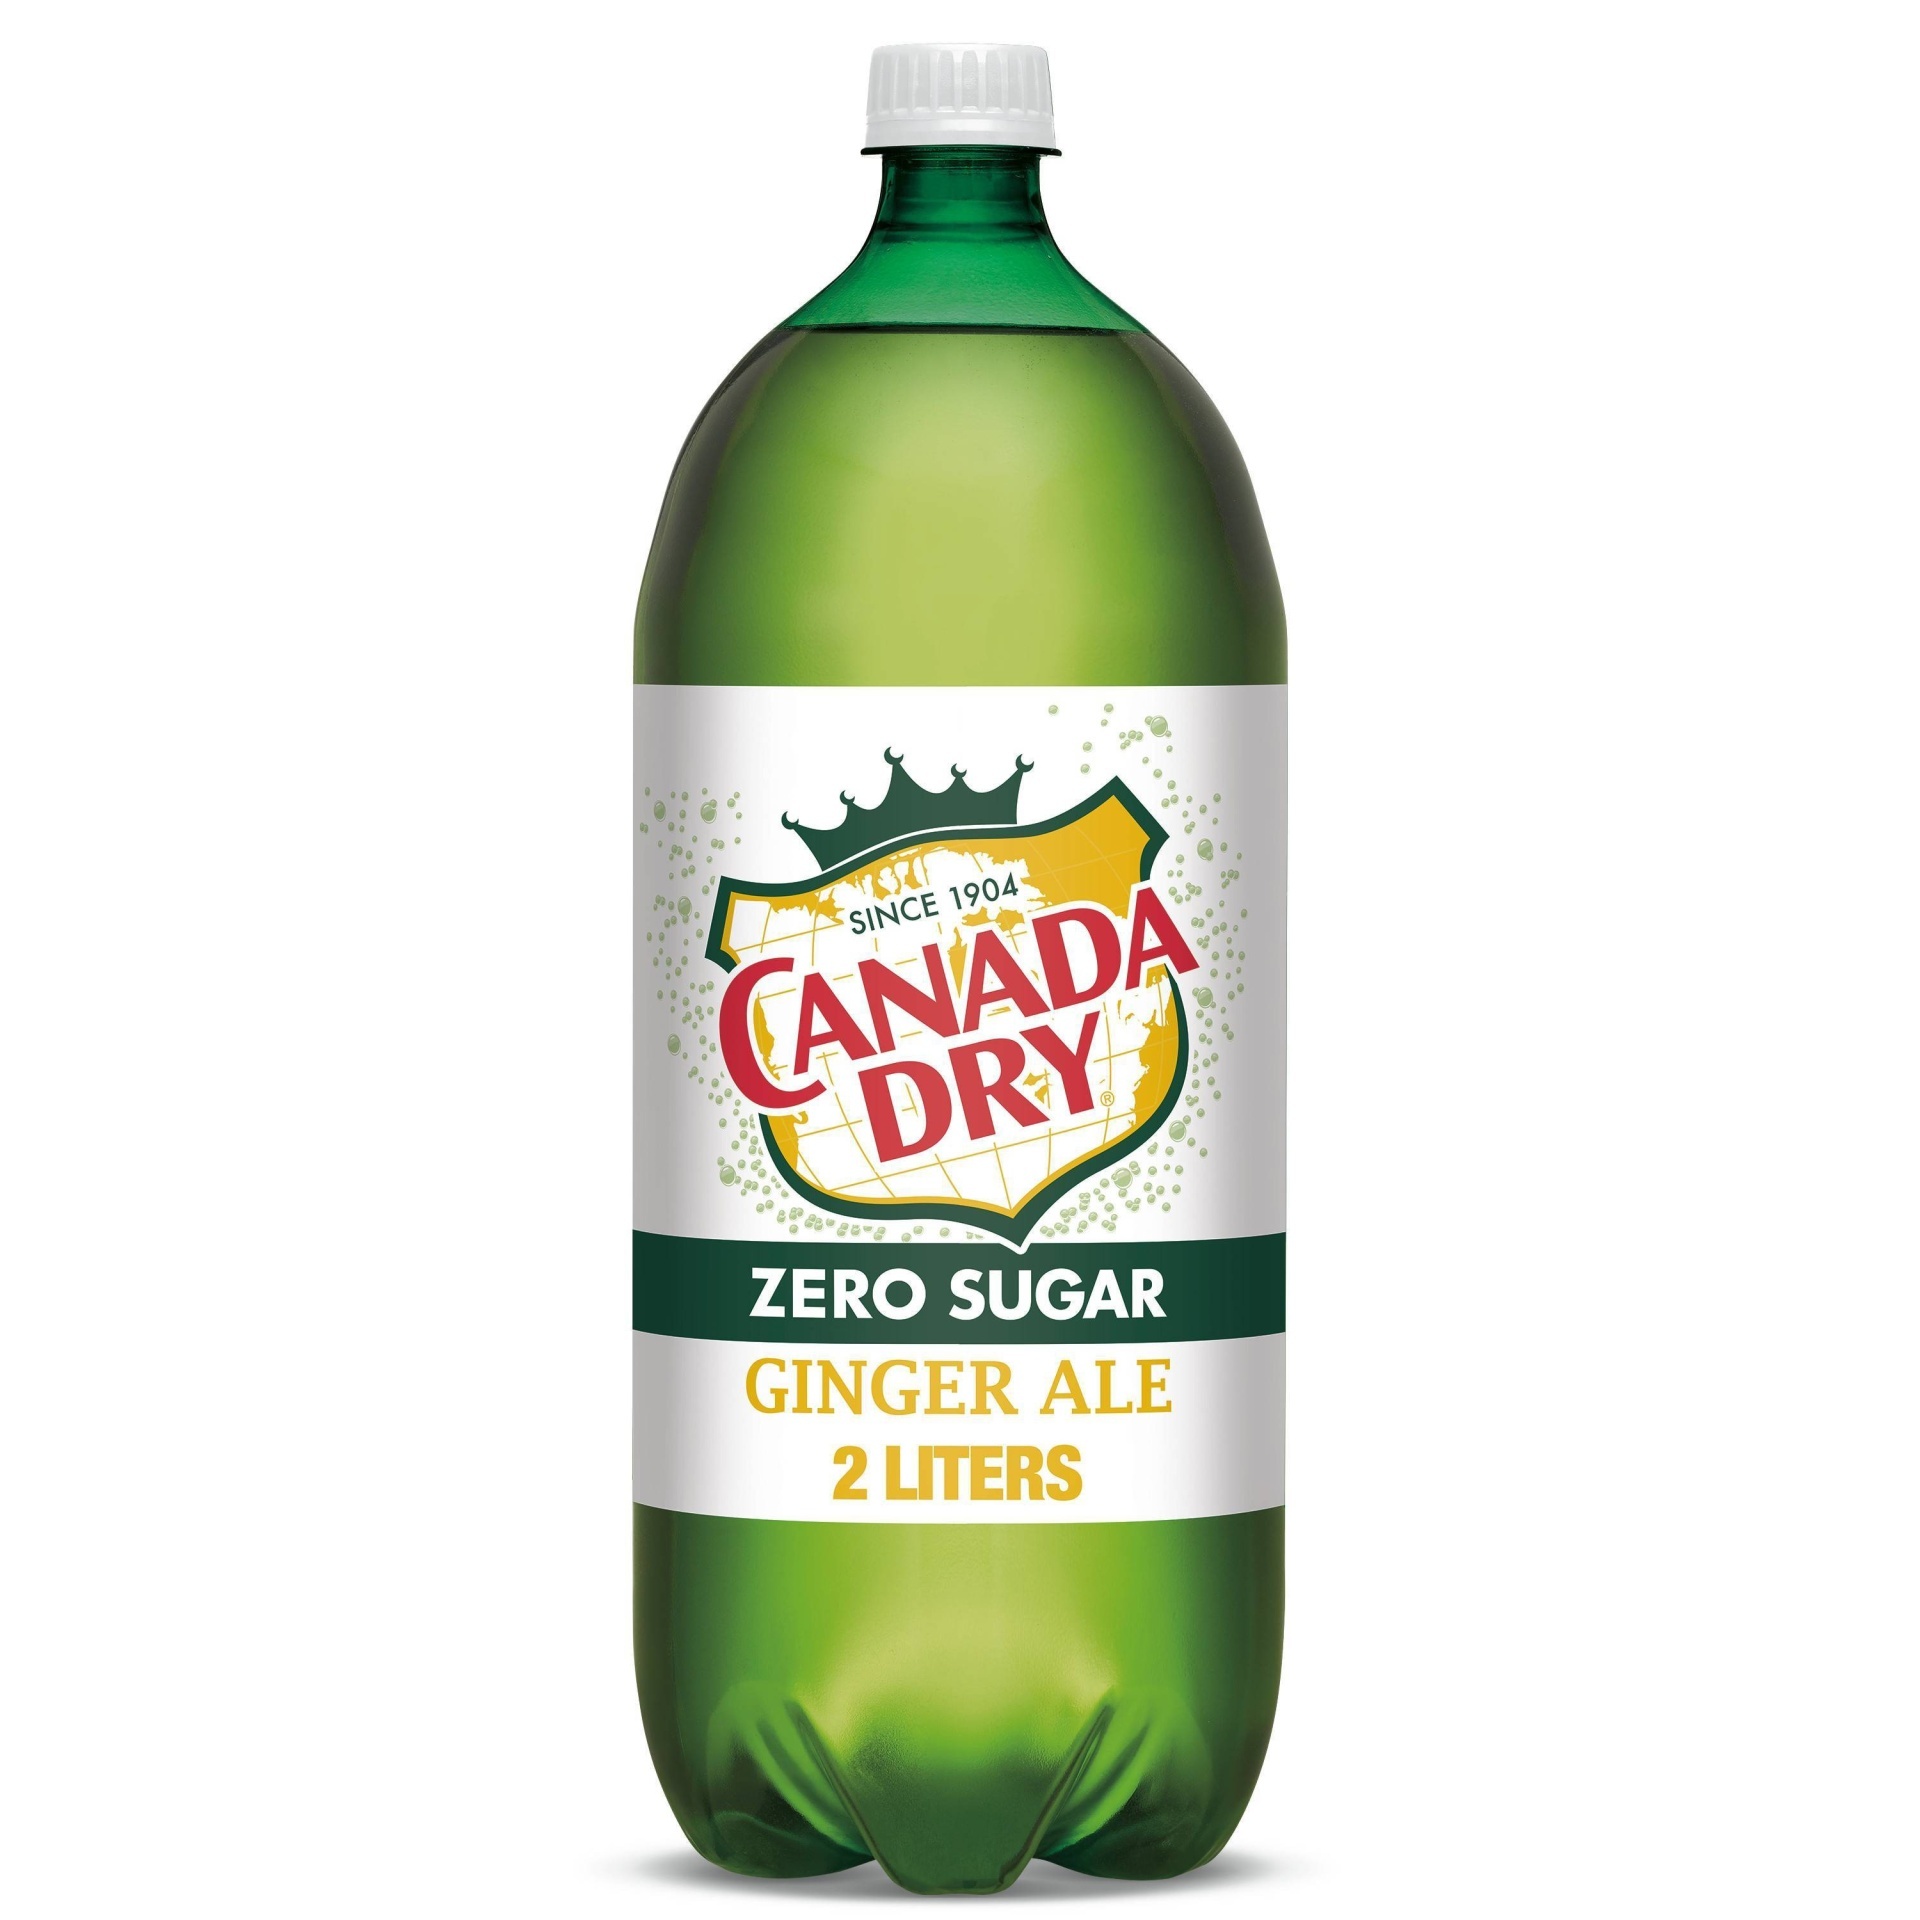 Canada Dry Zero Sugar Ginger Ale Bottle 2 Liter Shipt